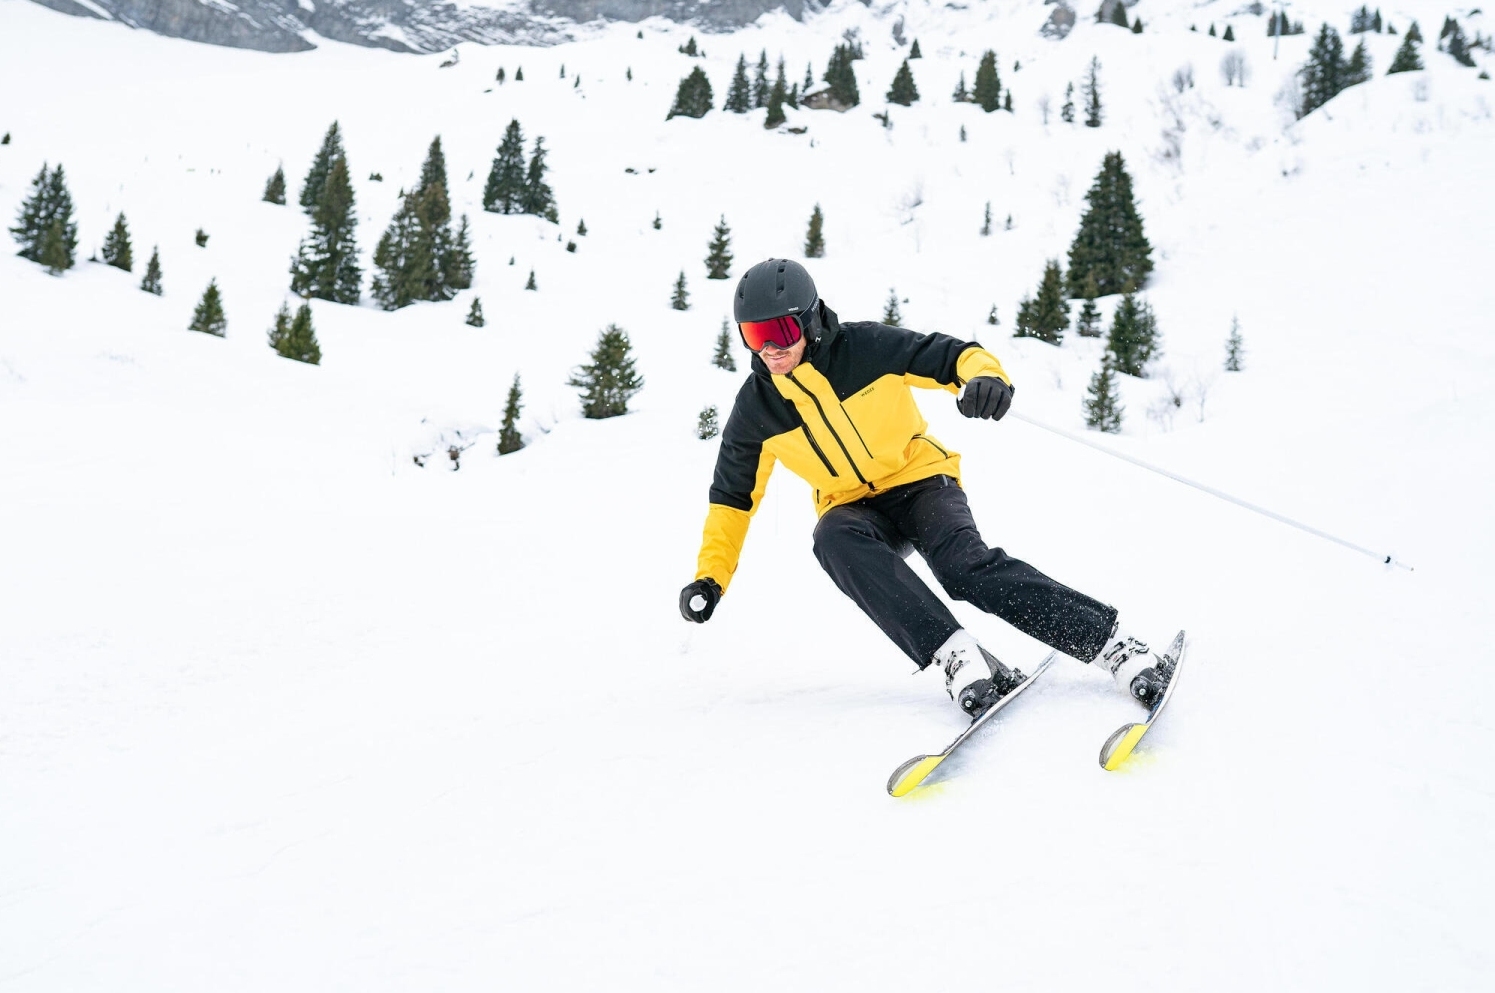 decathlon-wedze-500-sport-ski-jacket